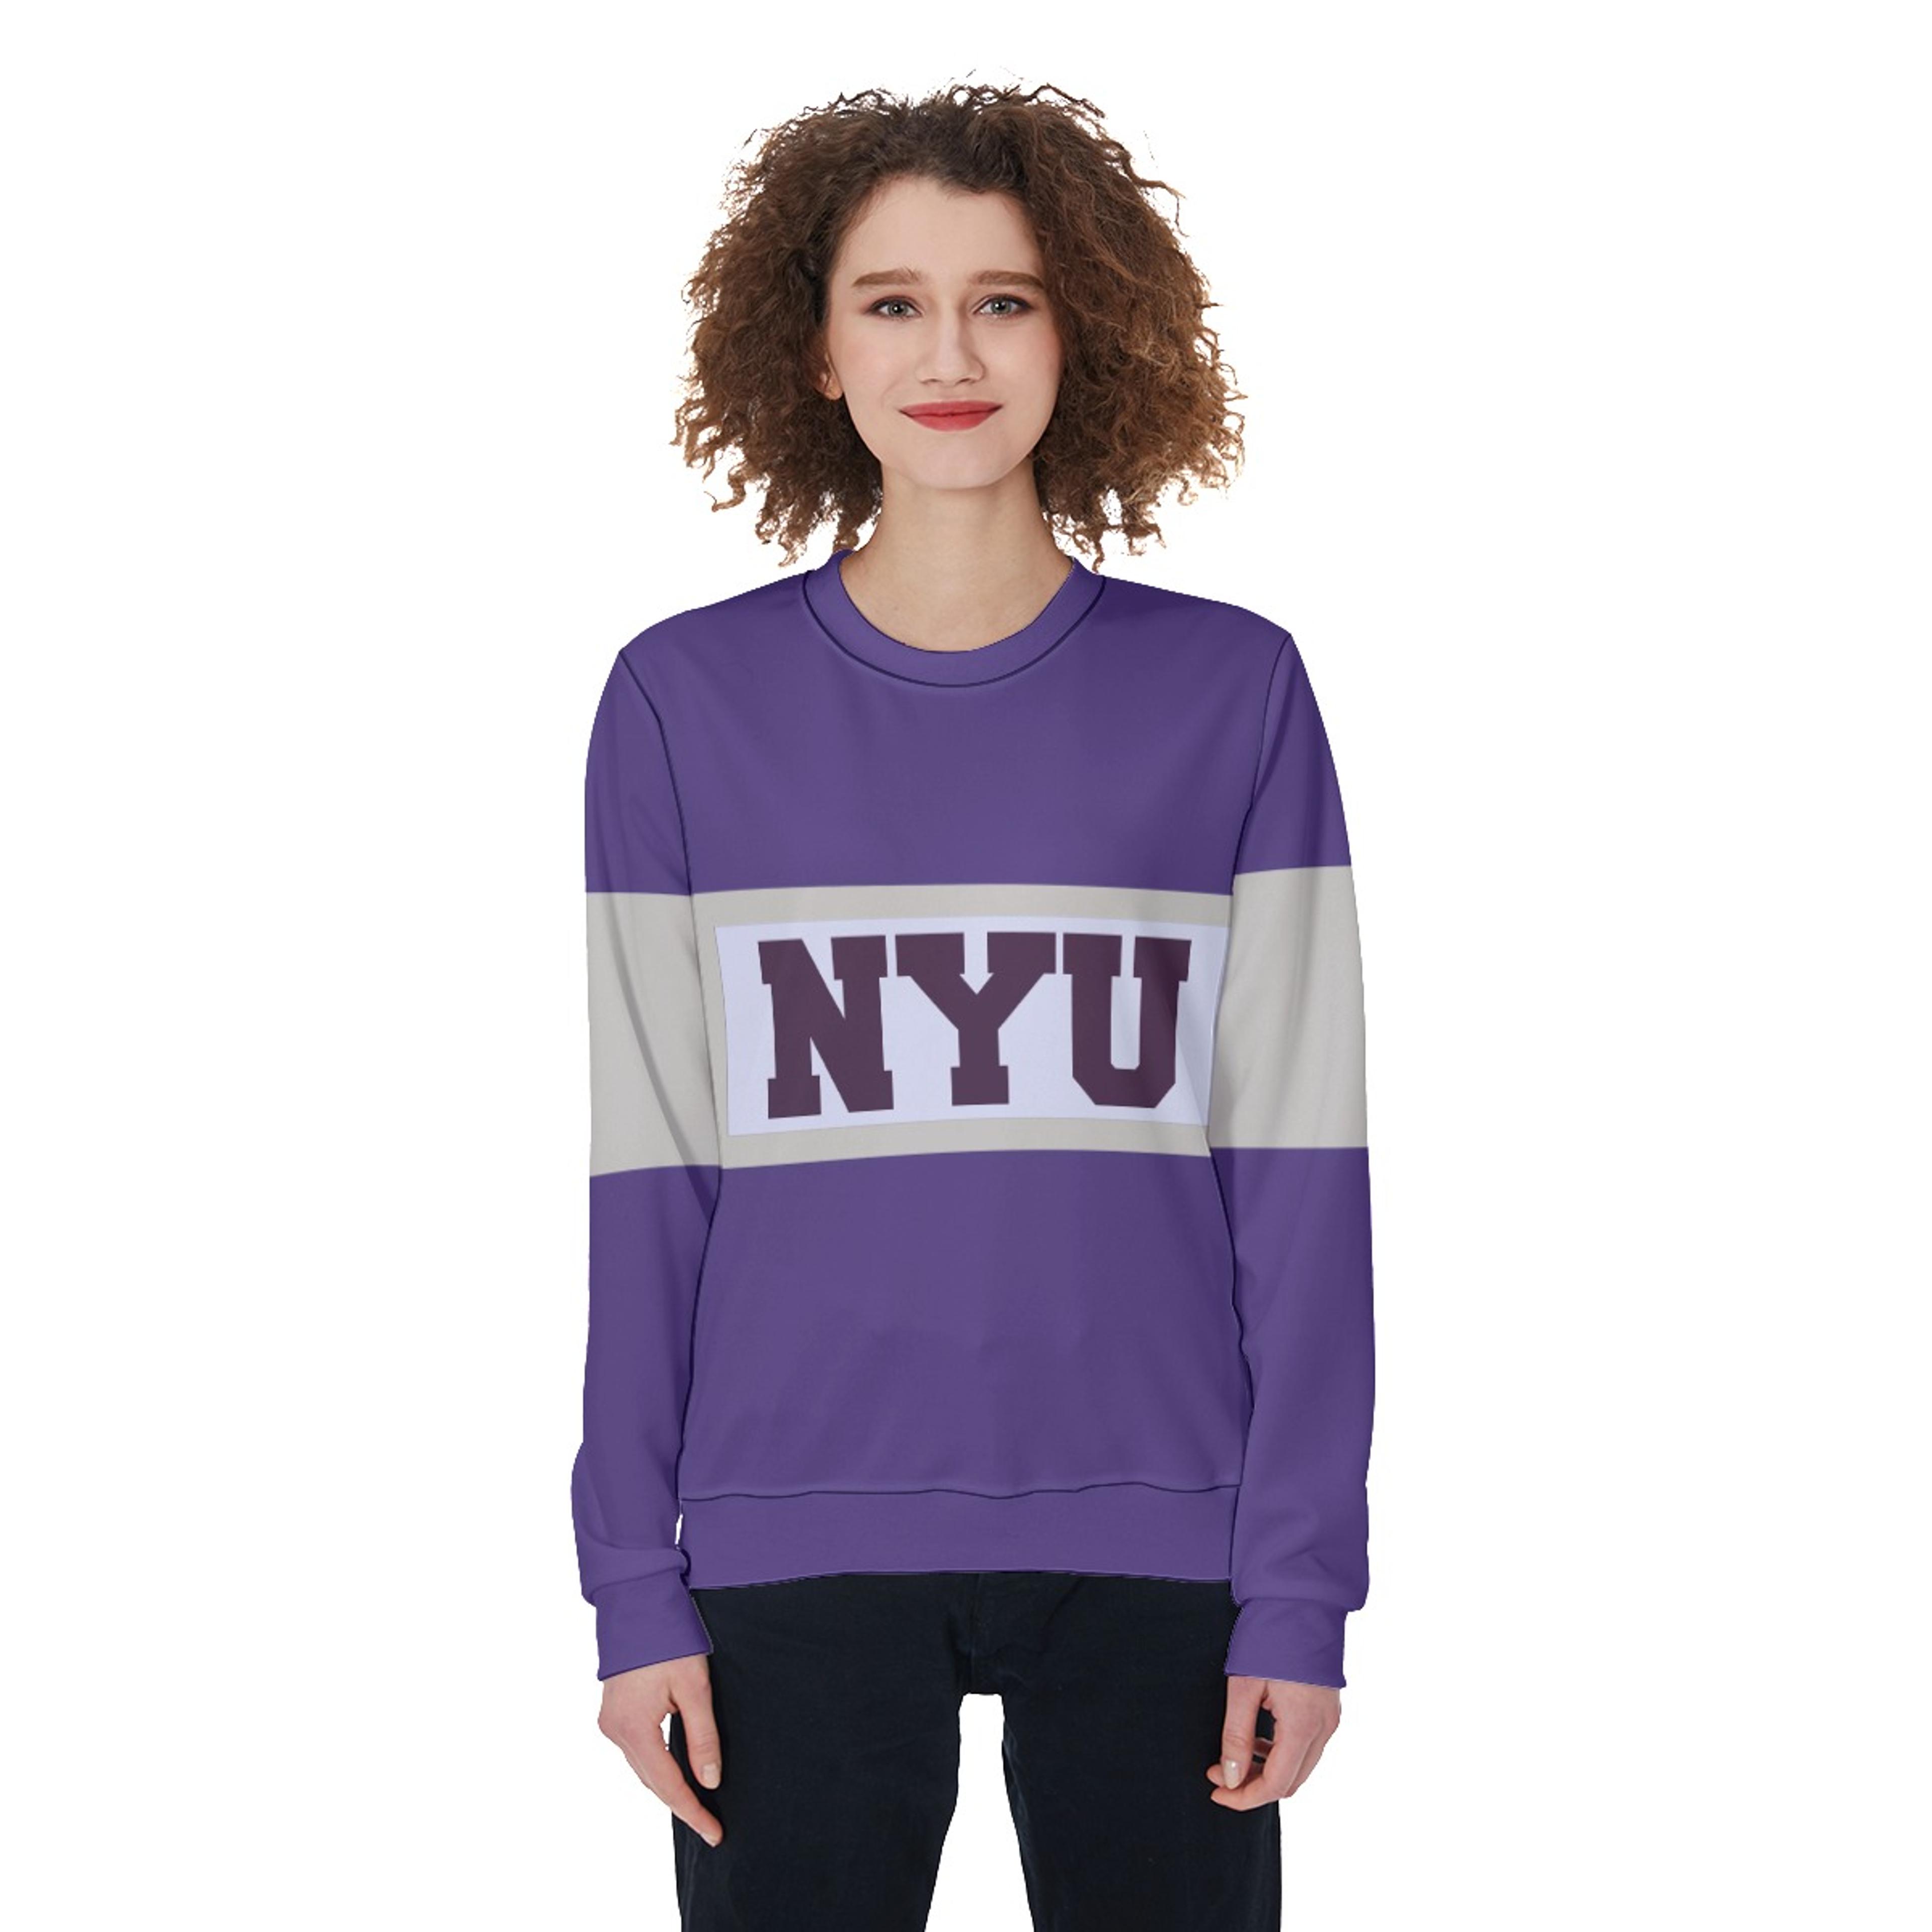 Taylor Swift Vintage NYU Sweatshirt - Rockatee